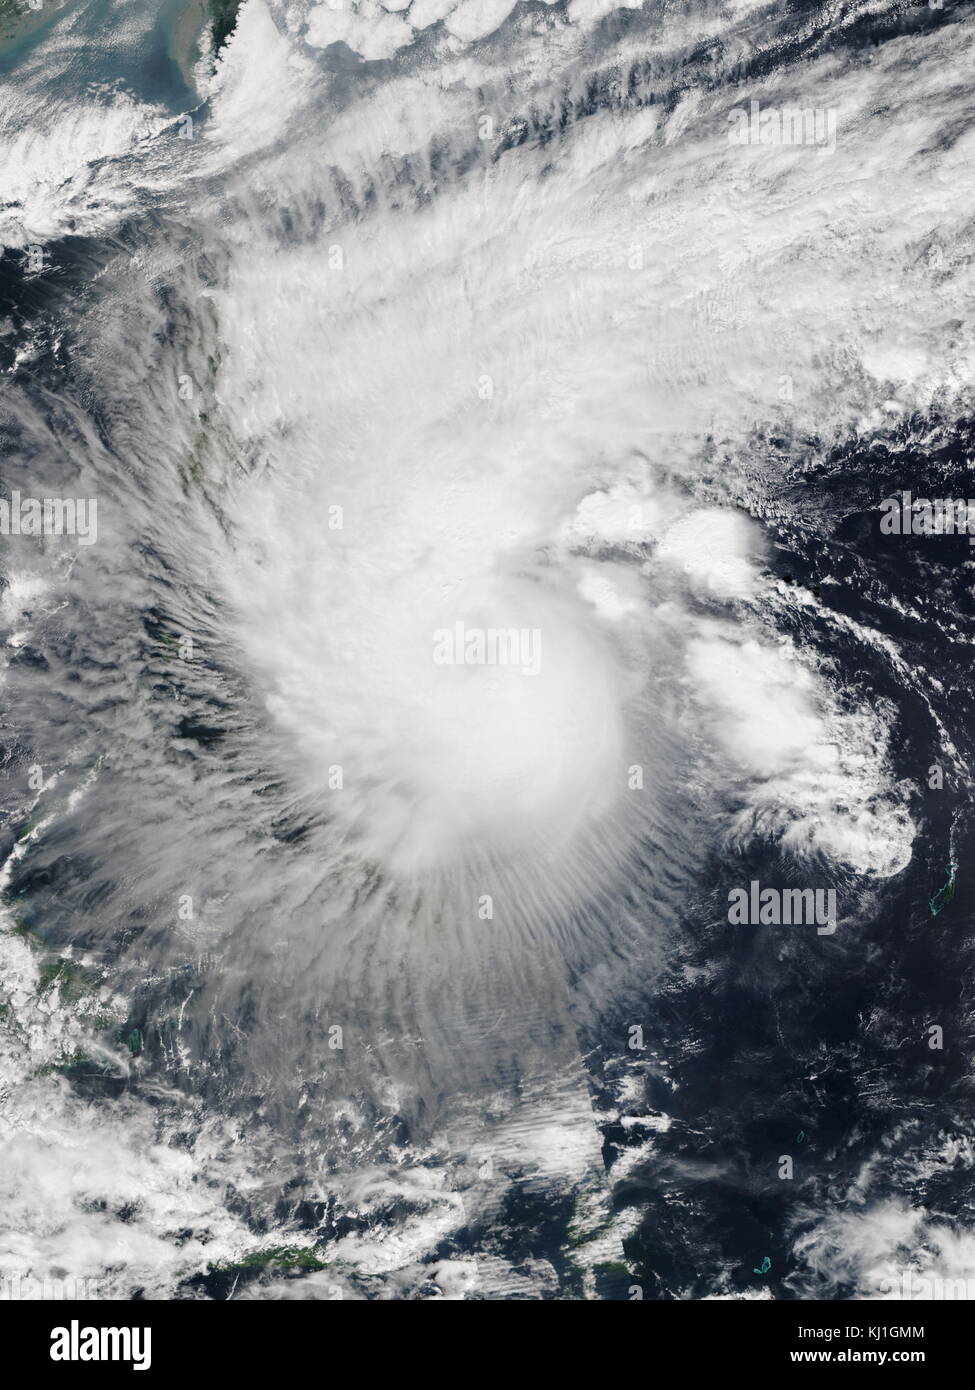 Category 1 Typhoon, Severe Tropical Storm Mekkhala making landfall over the Philippines on January 17, 2015. Stock Photo